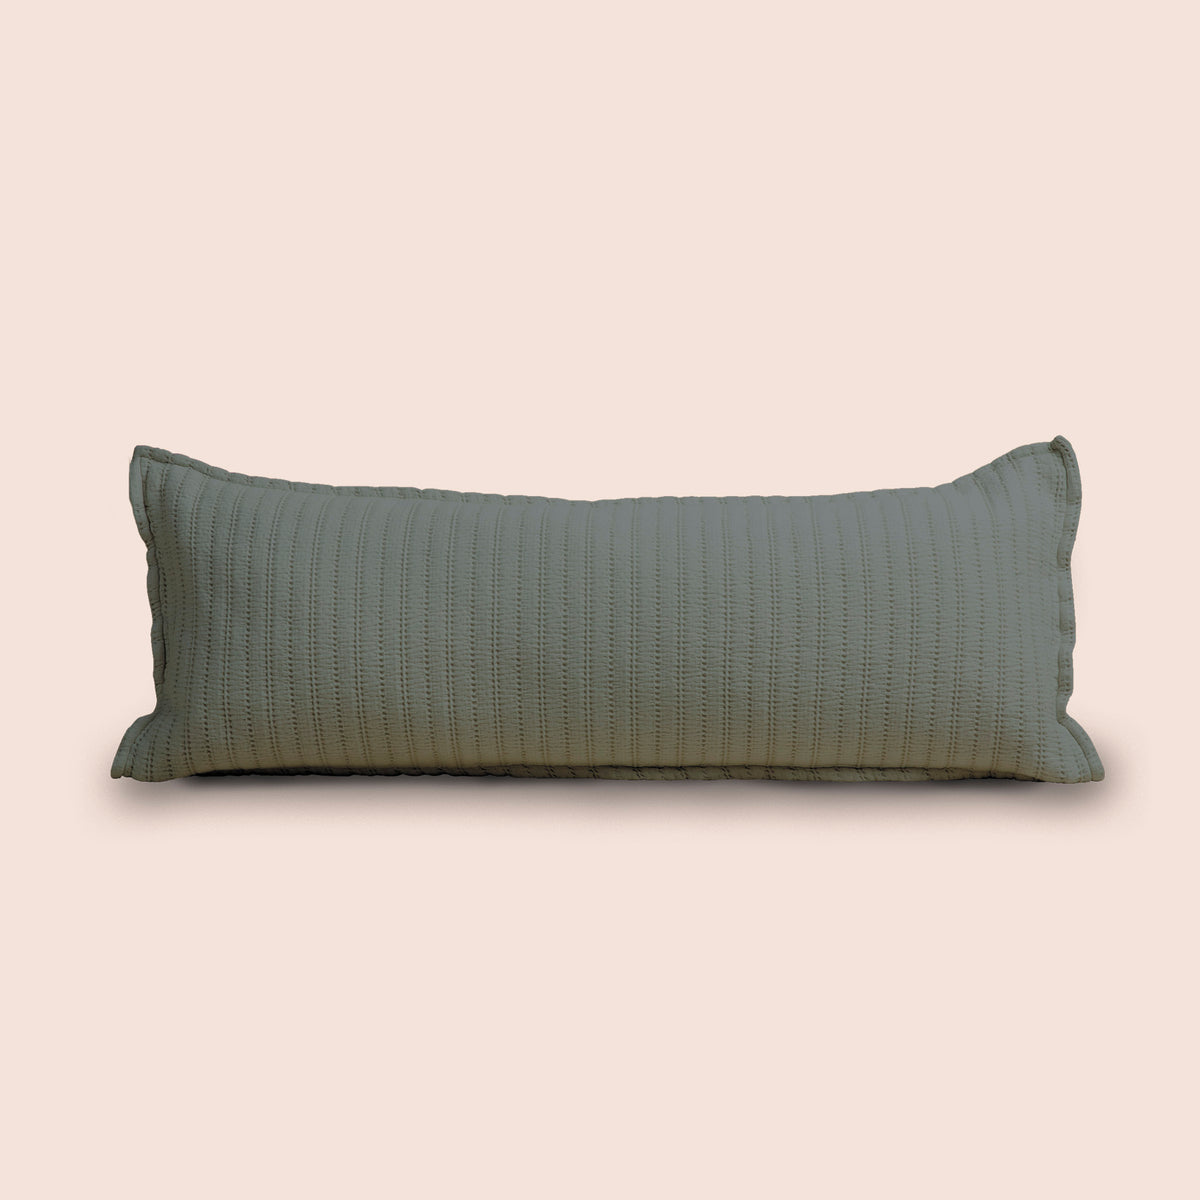 Image of Agave Ridgeback Lumbar Pillow Cover on a lumbar pillow with a light pink background